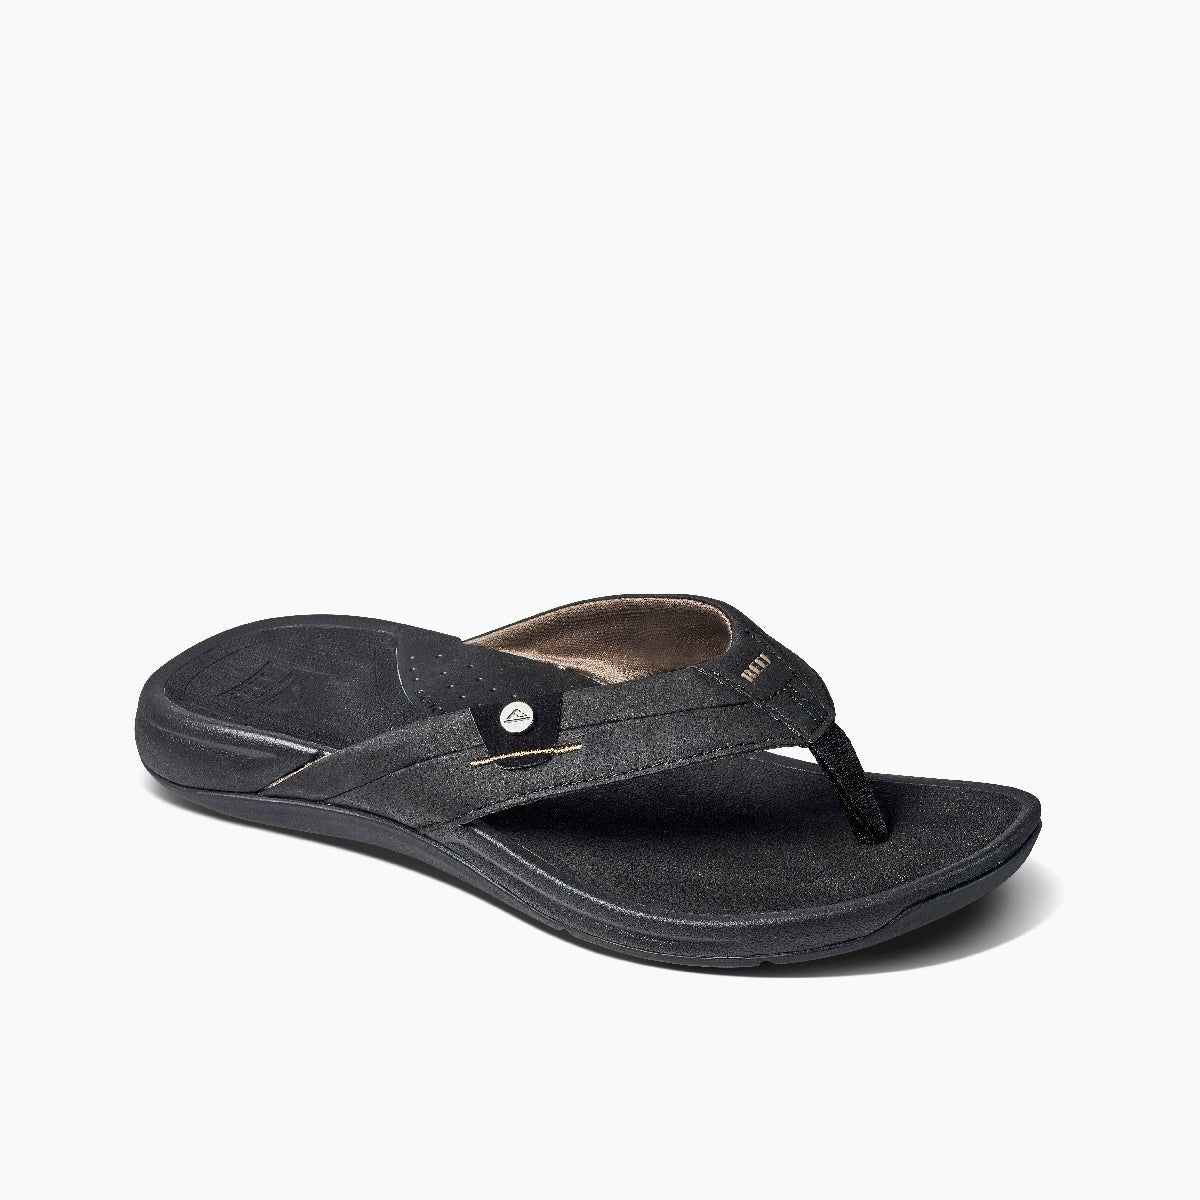 Reef Men's Pacific Flip Flop Sandals - Black/Brown